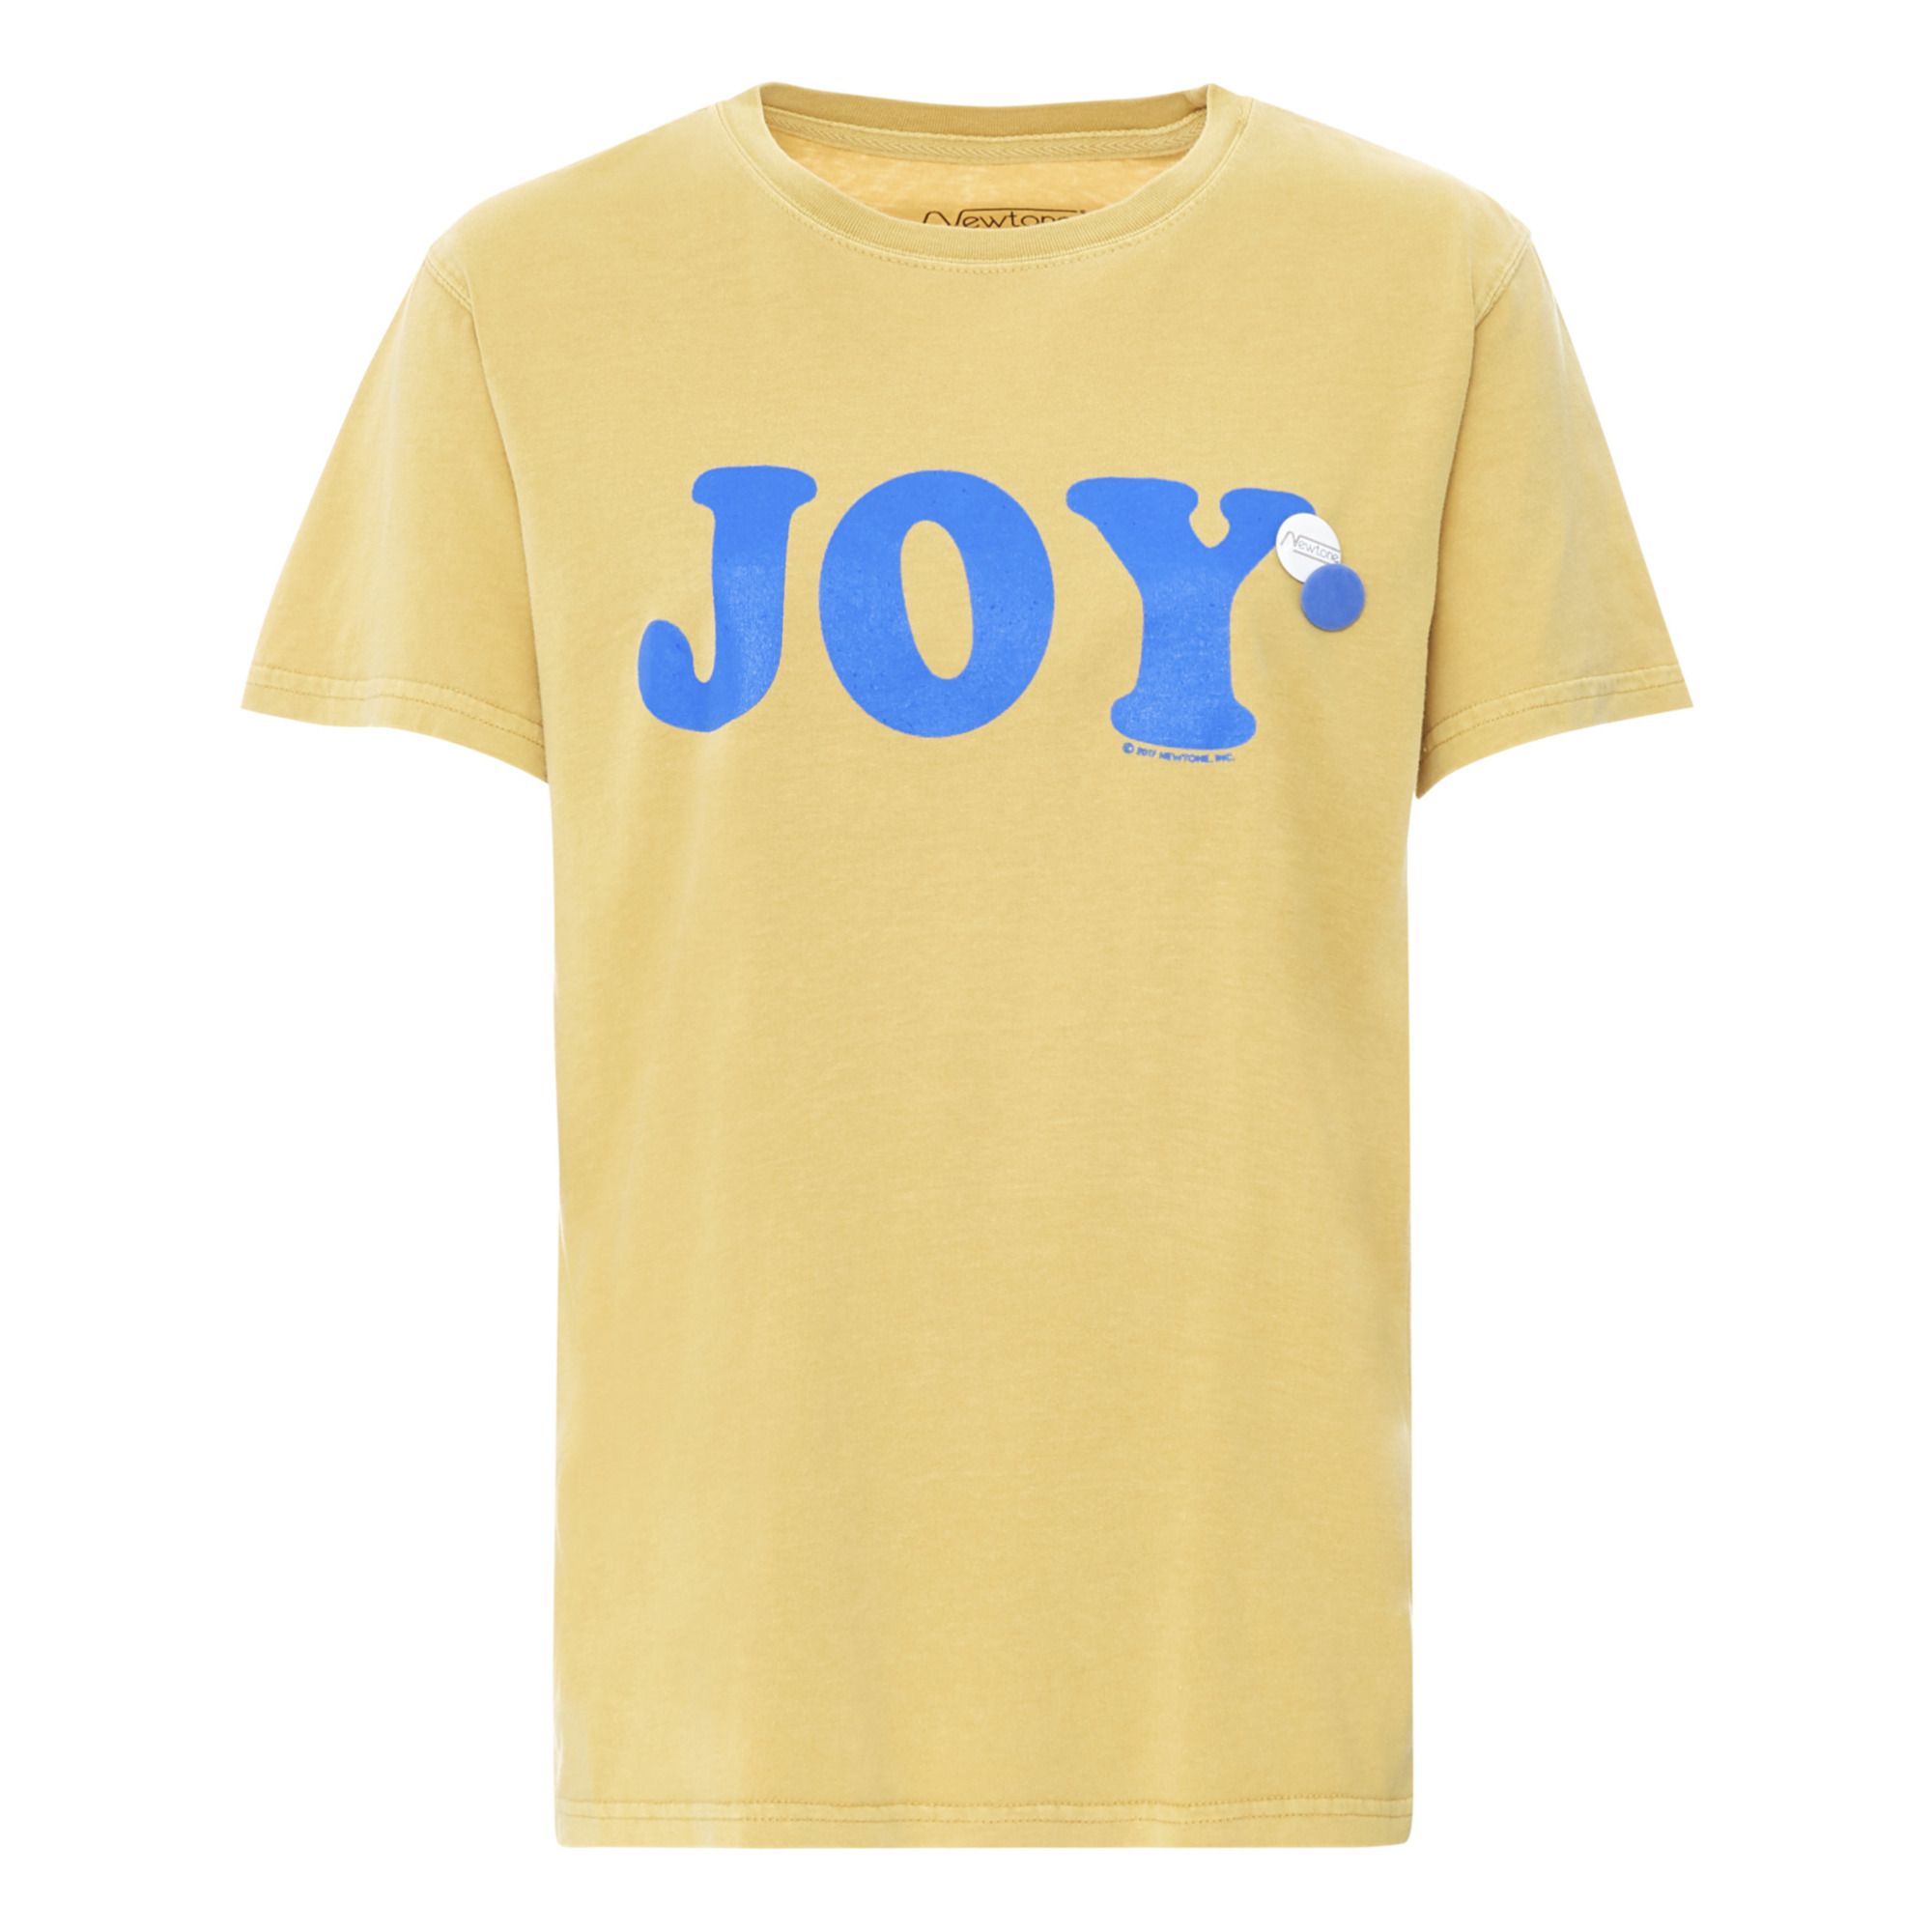 Newtone - T-Shirt Joy - Femme - Jaune moutarde